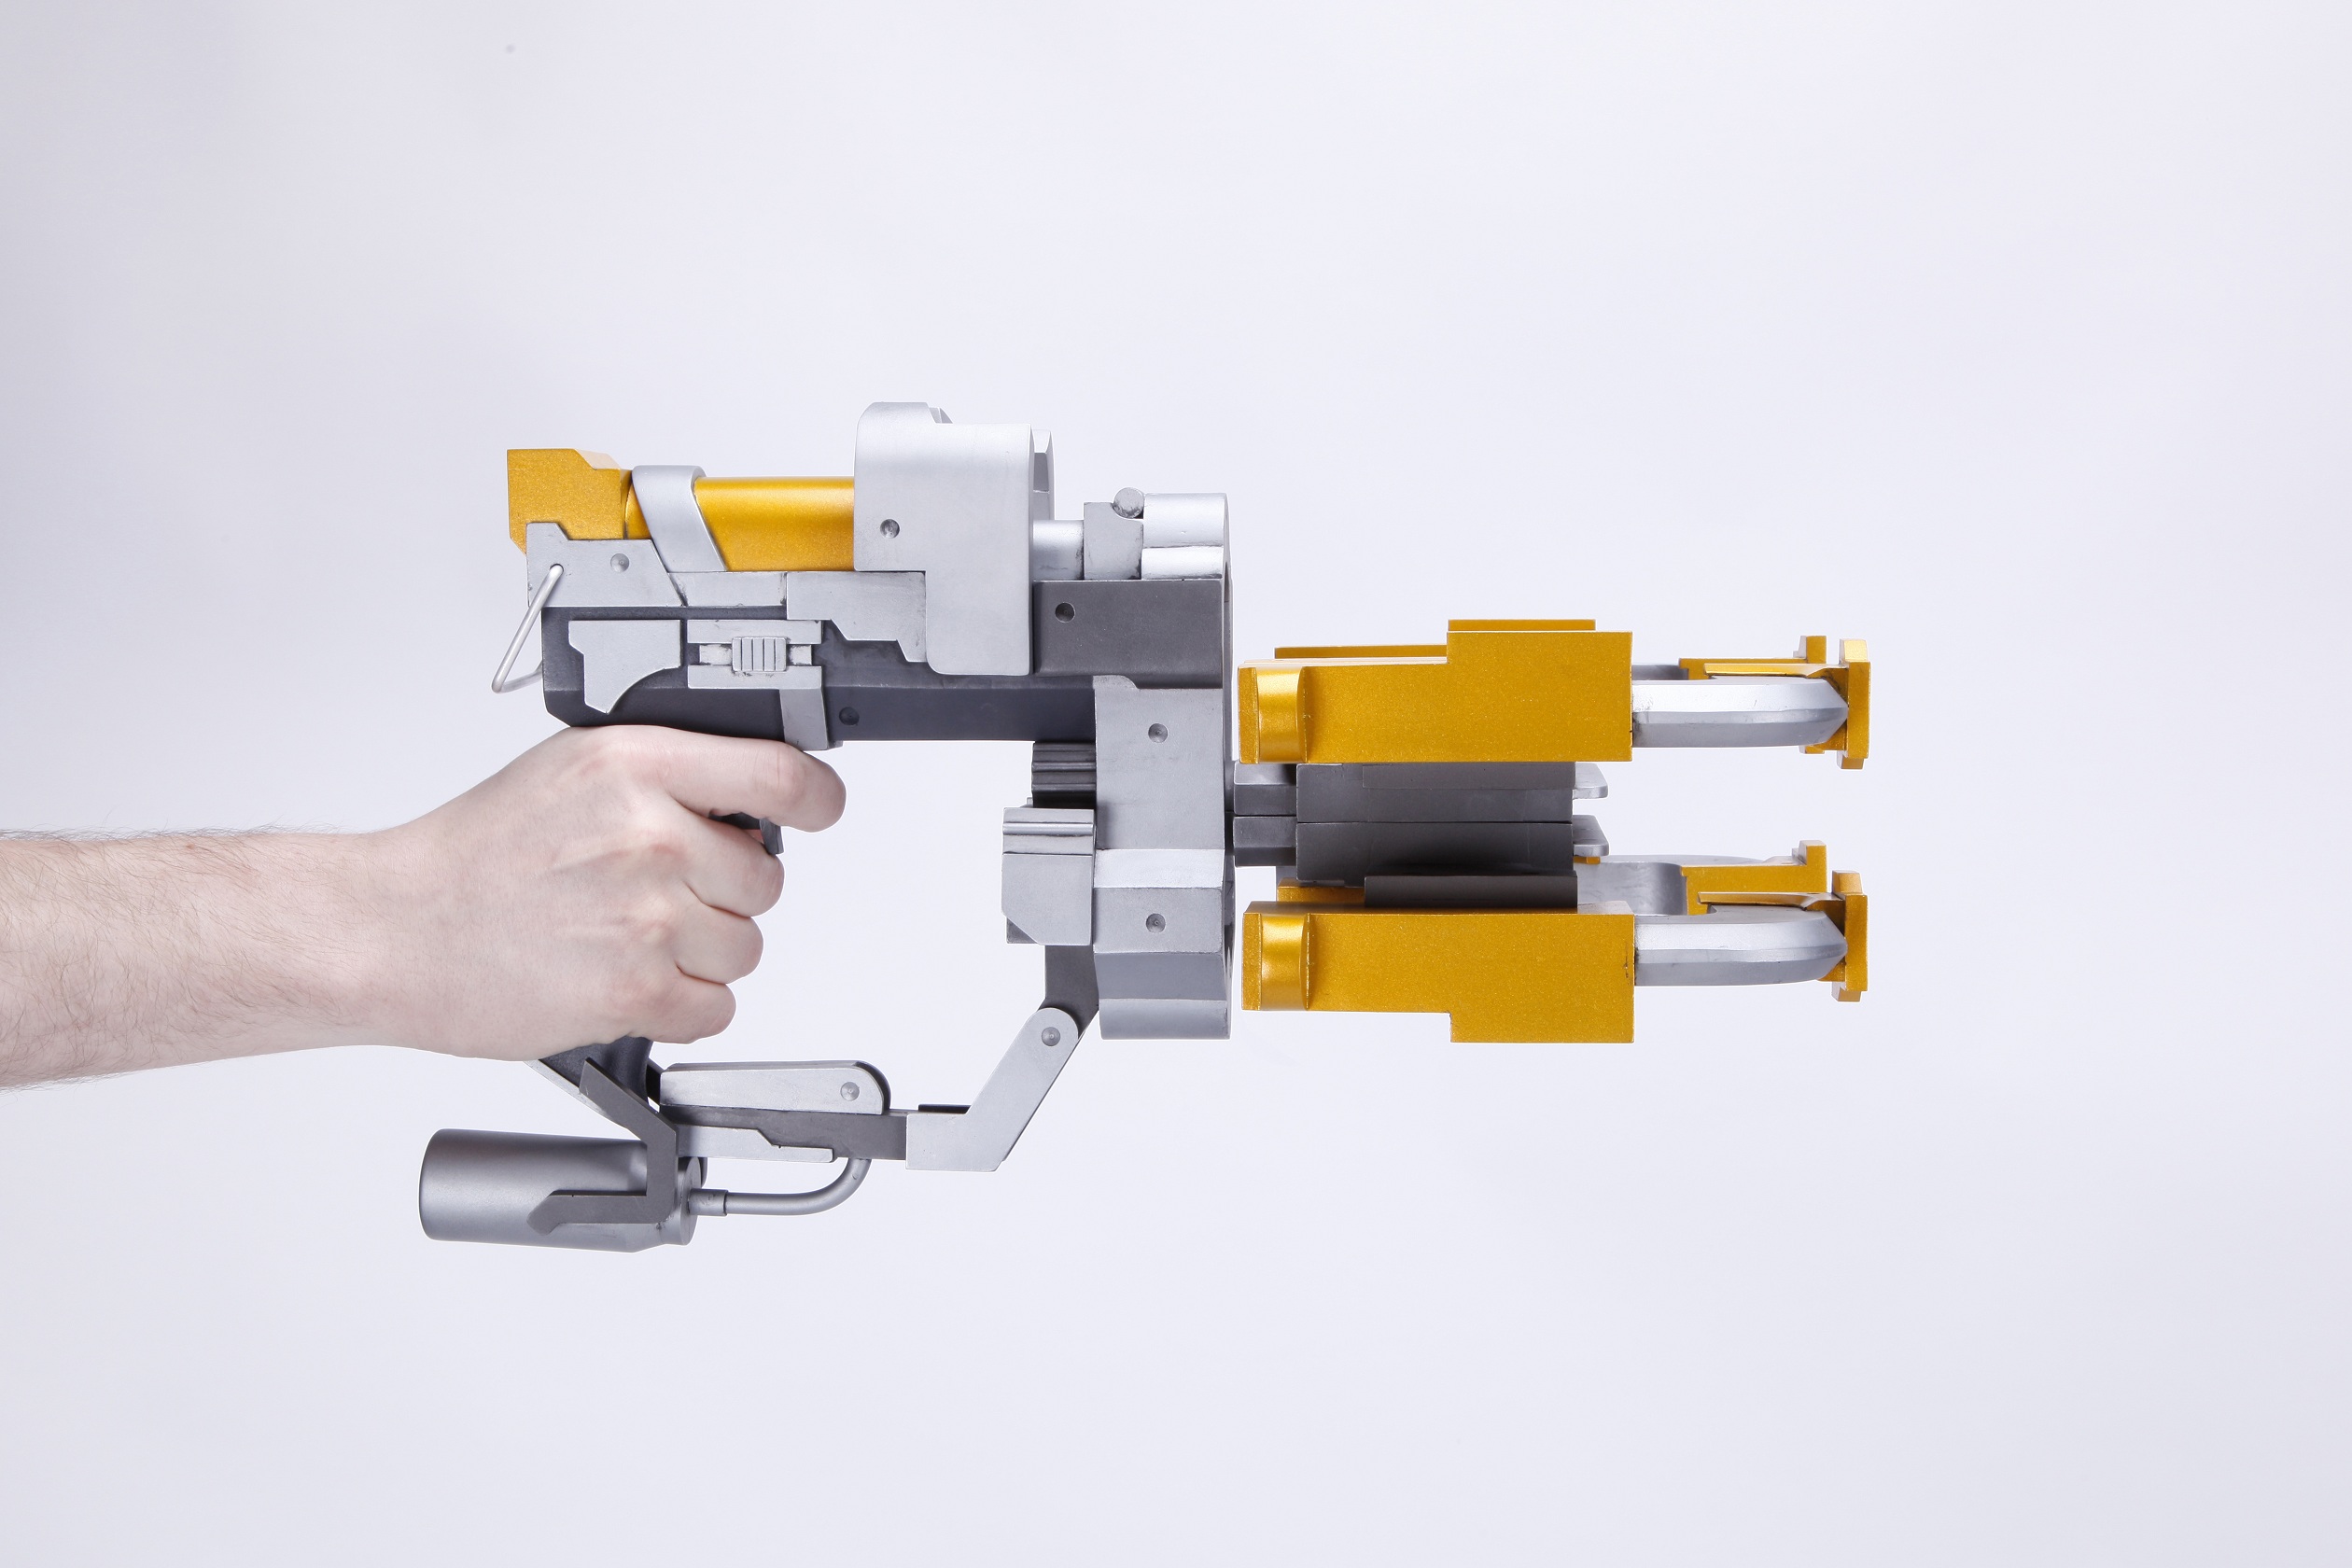 dead space plasma cutter toy